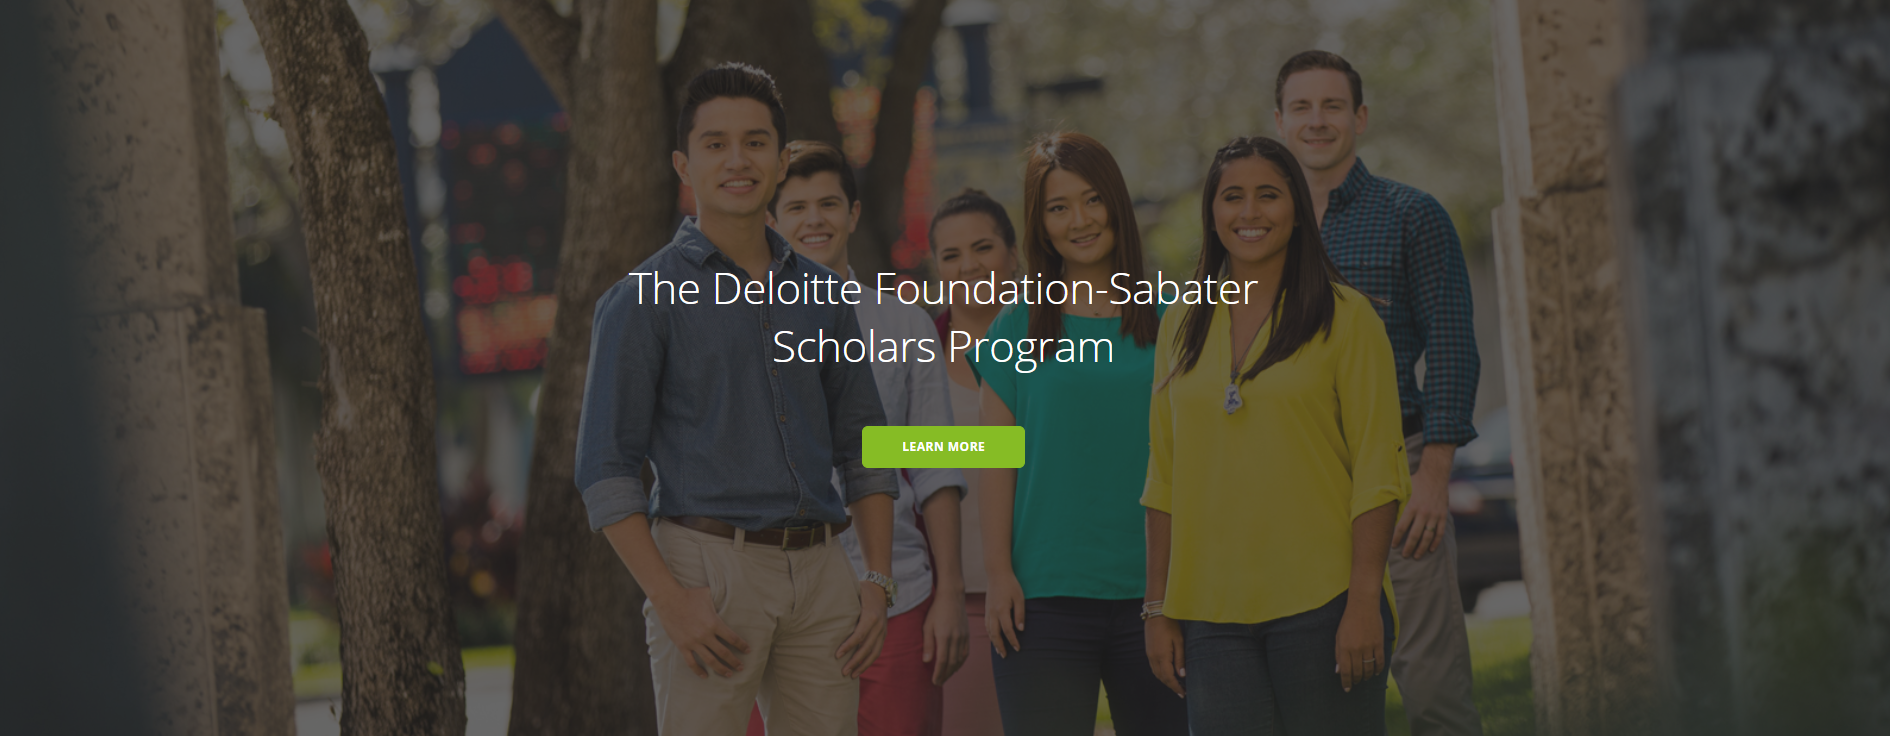 deloitte-foundation-sabater-scholars-program.png